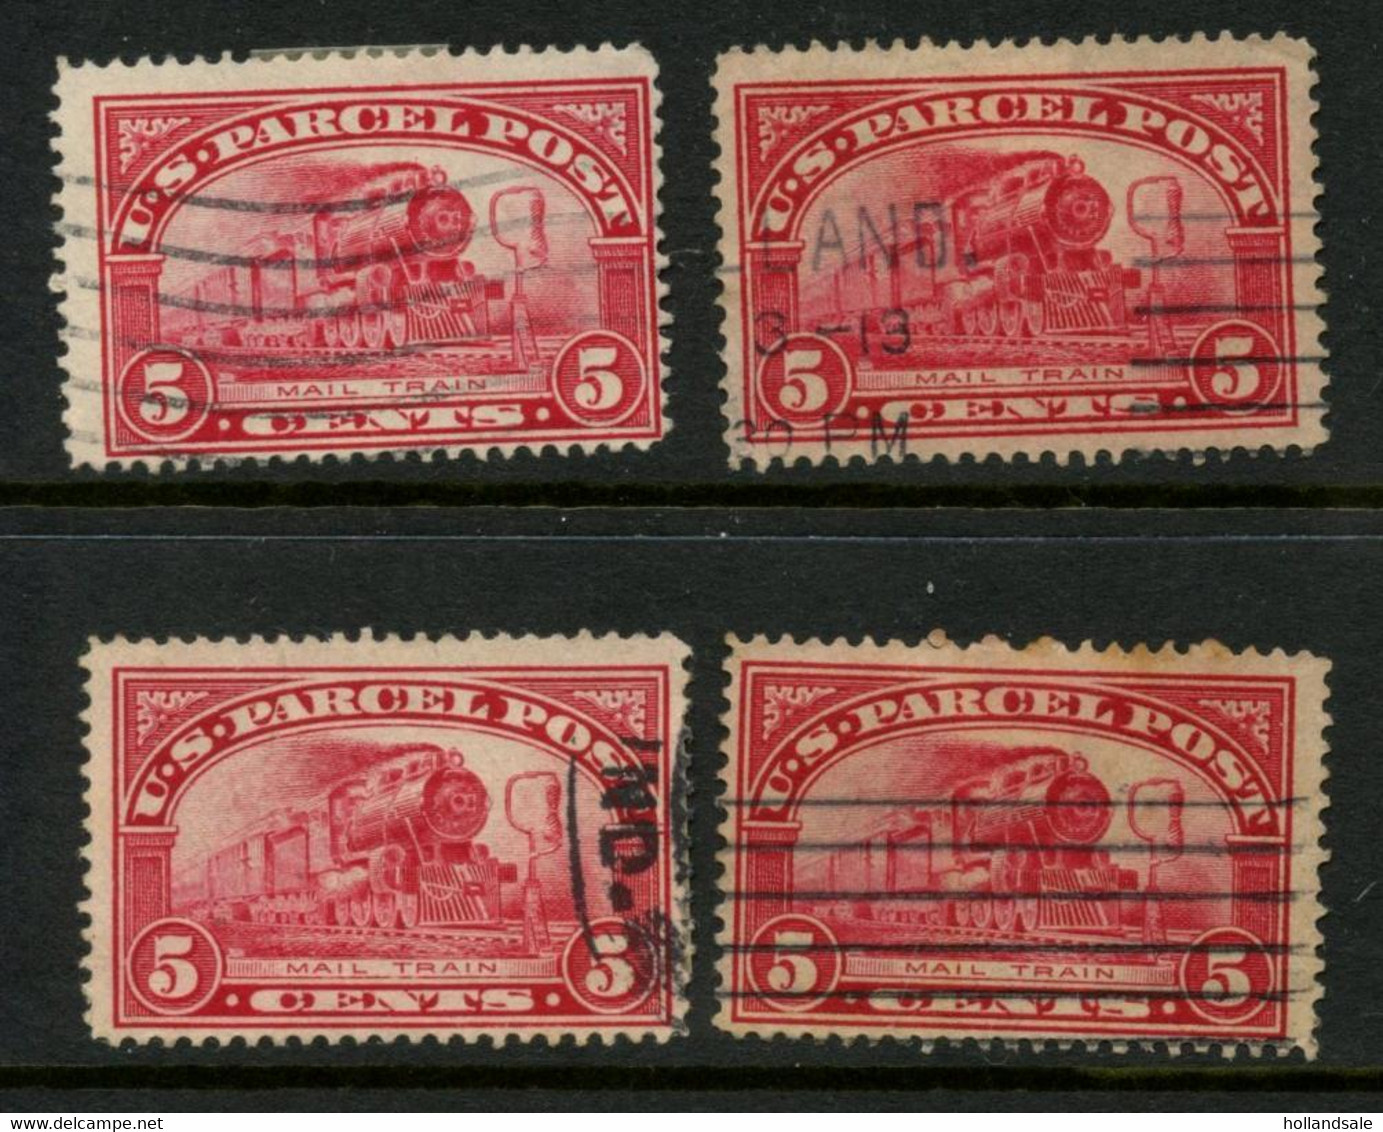 U.S.A. - 1913  5c Parcel Post Stamps. Five (5) Stamps. Used. SCOTT # PP5. - Reisgoedzegels